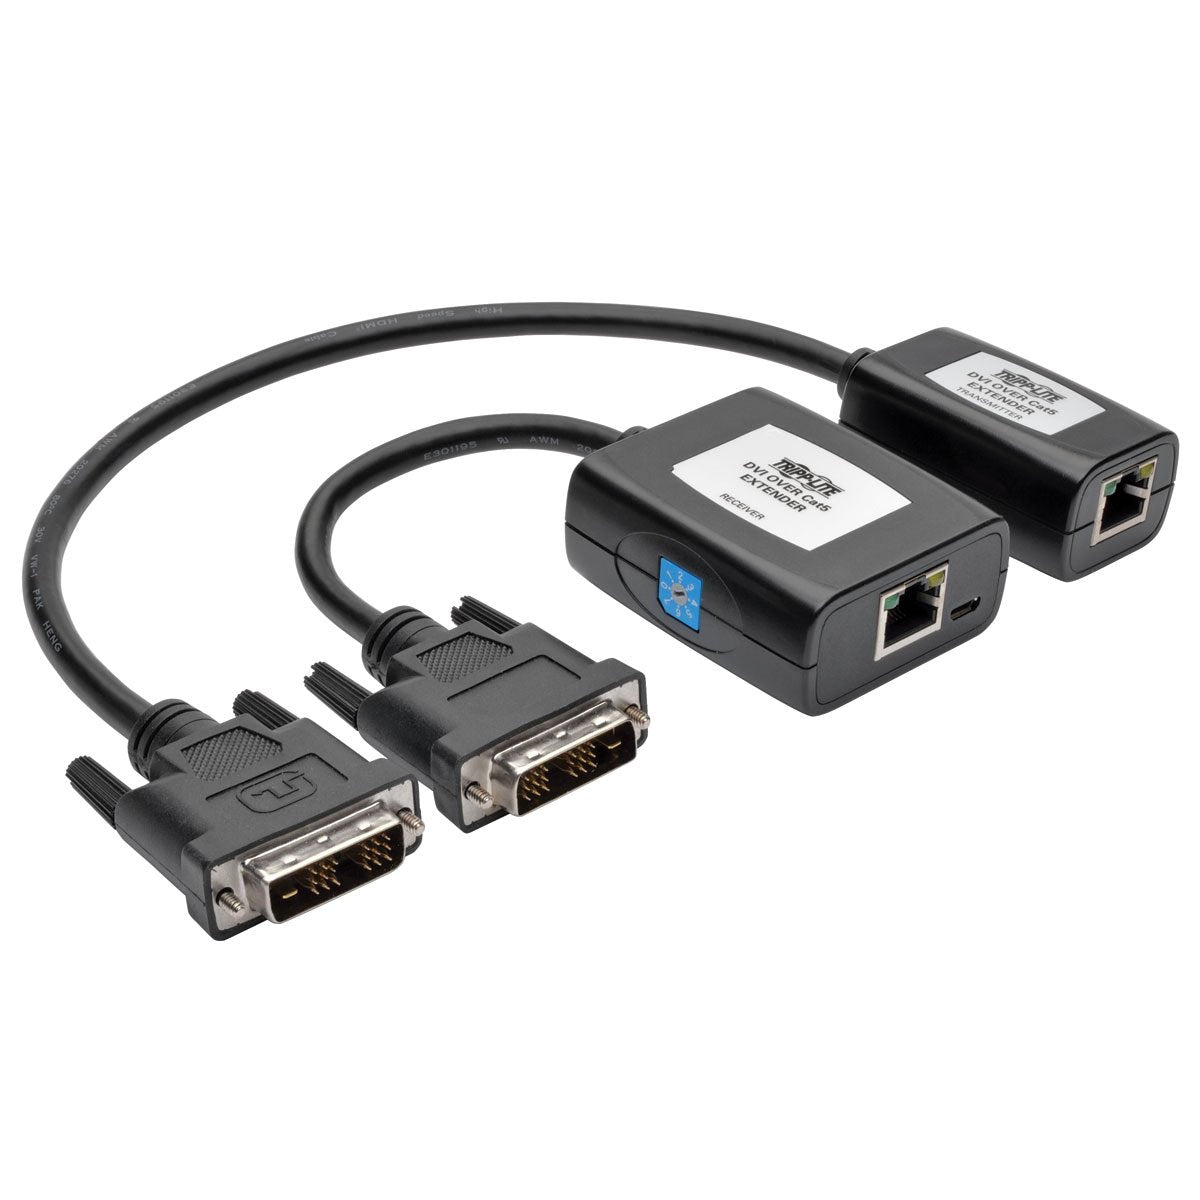 Tripp Lite DVI over Cat5 Cat6 Extender Extended Range Video Transmitter and Receiver 1920x1080 at 60Hz B140-101X